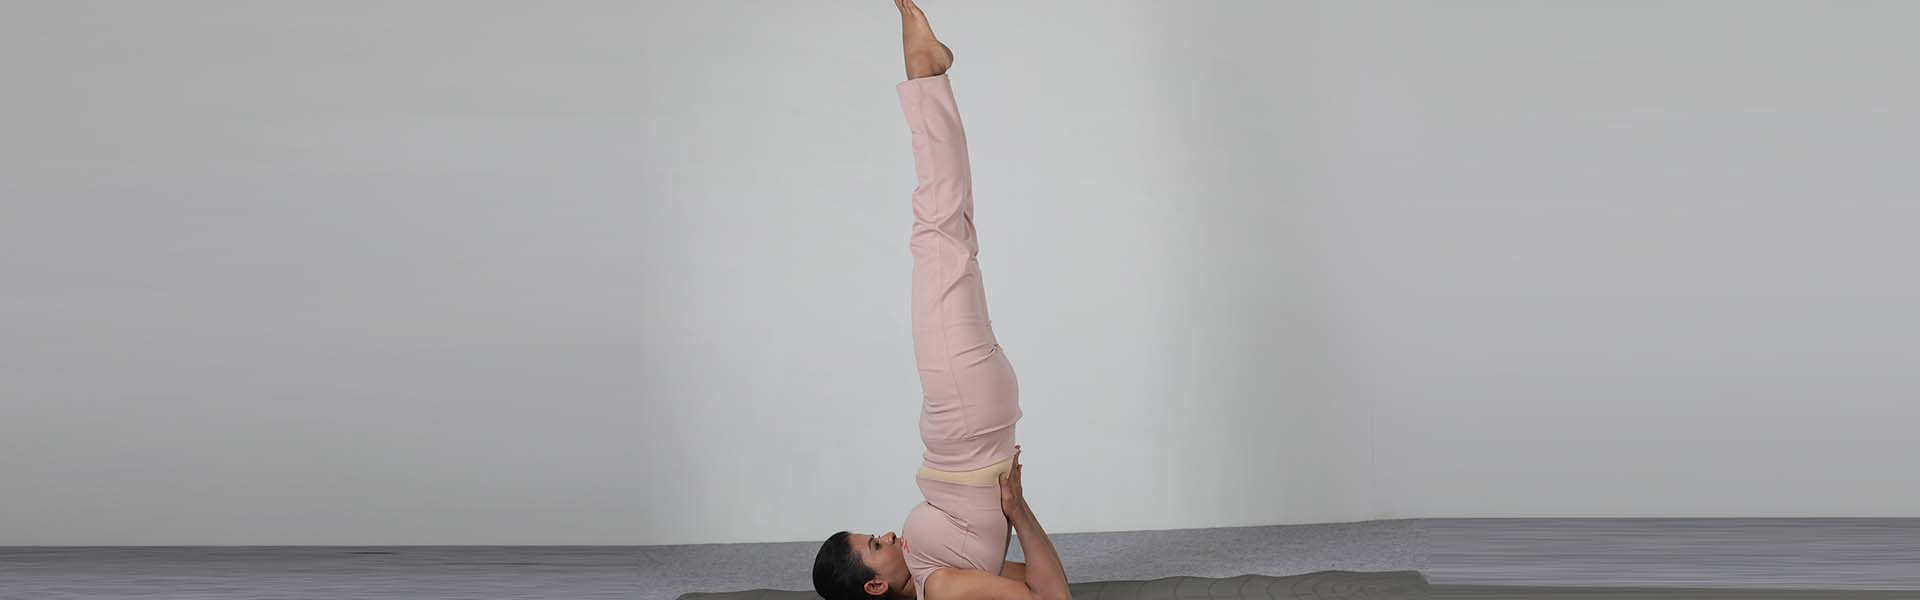 Yoga pose Shoulder stand (Sarvangasana) for beginners | Shoulder stand  yoga, Shoulder stand, Yoga poses